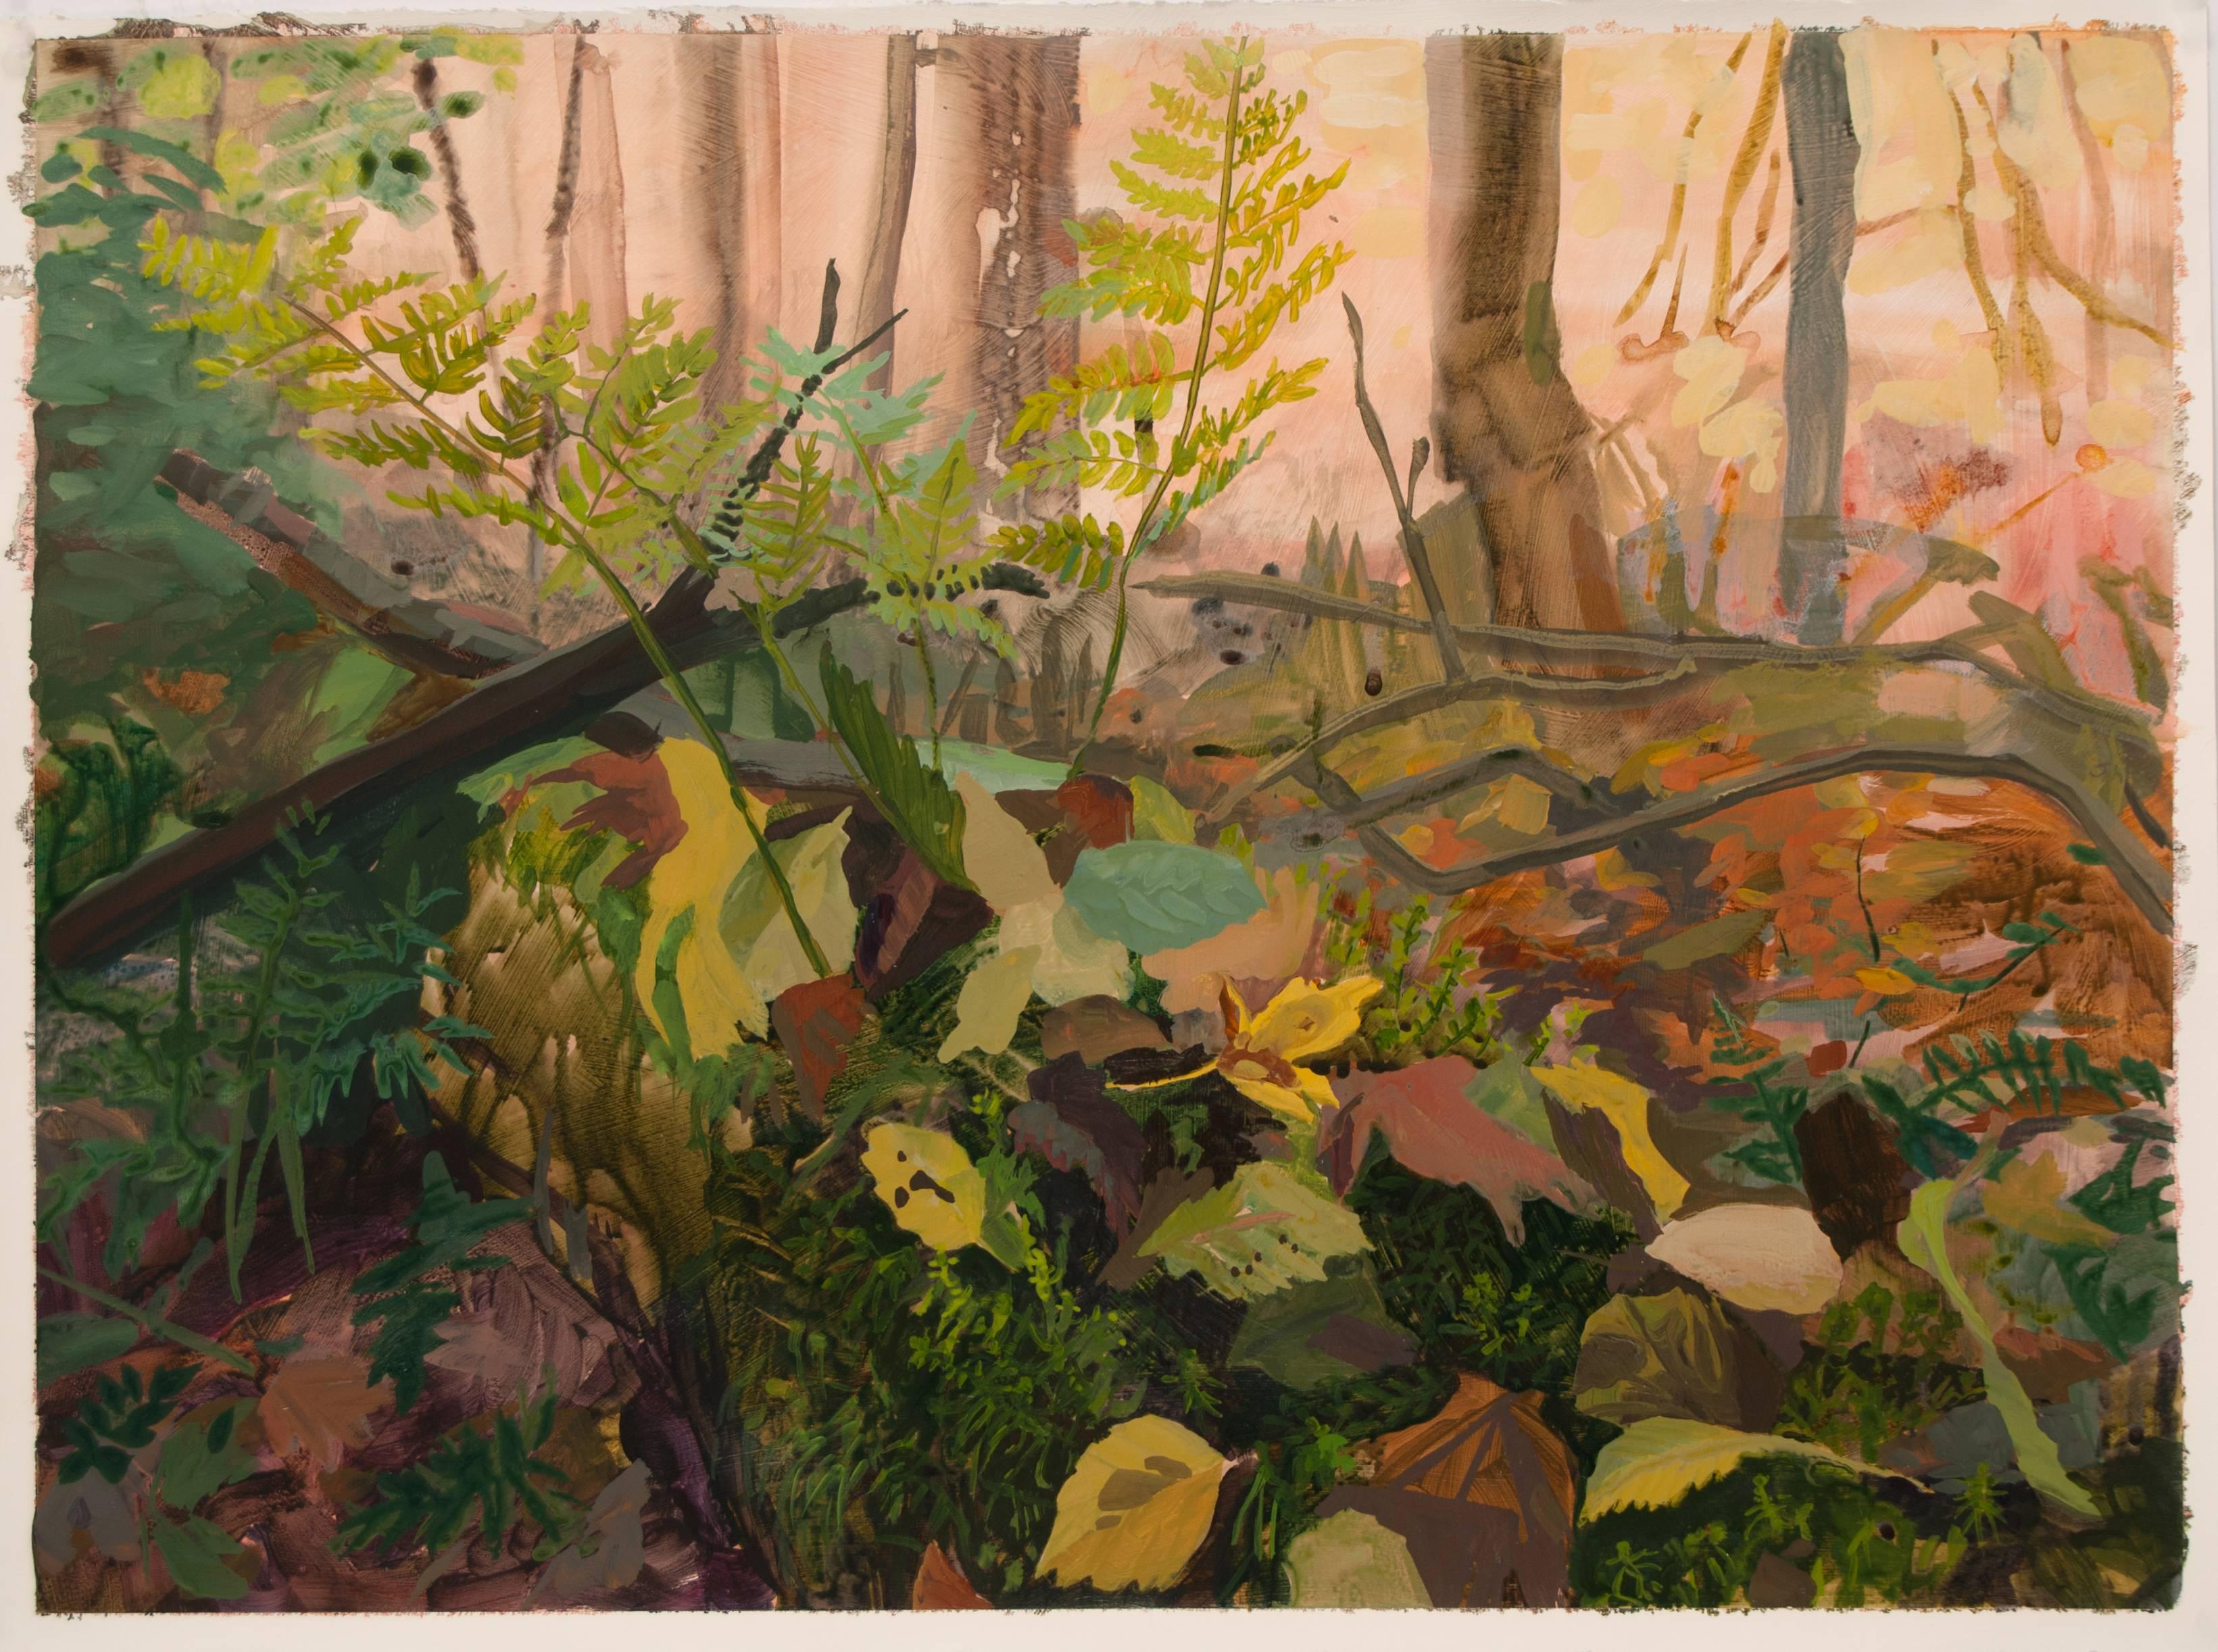 Kristin Musgnug Landscape Painting - Fallen Log with Fallen Leaves